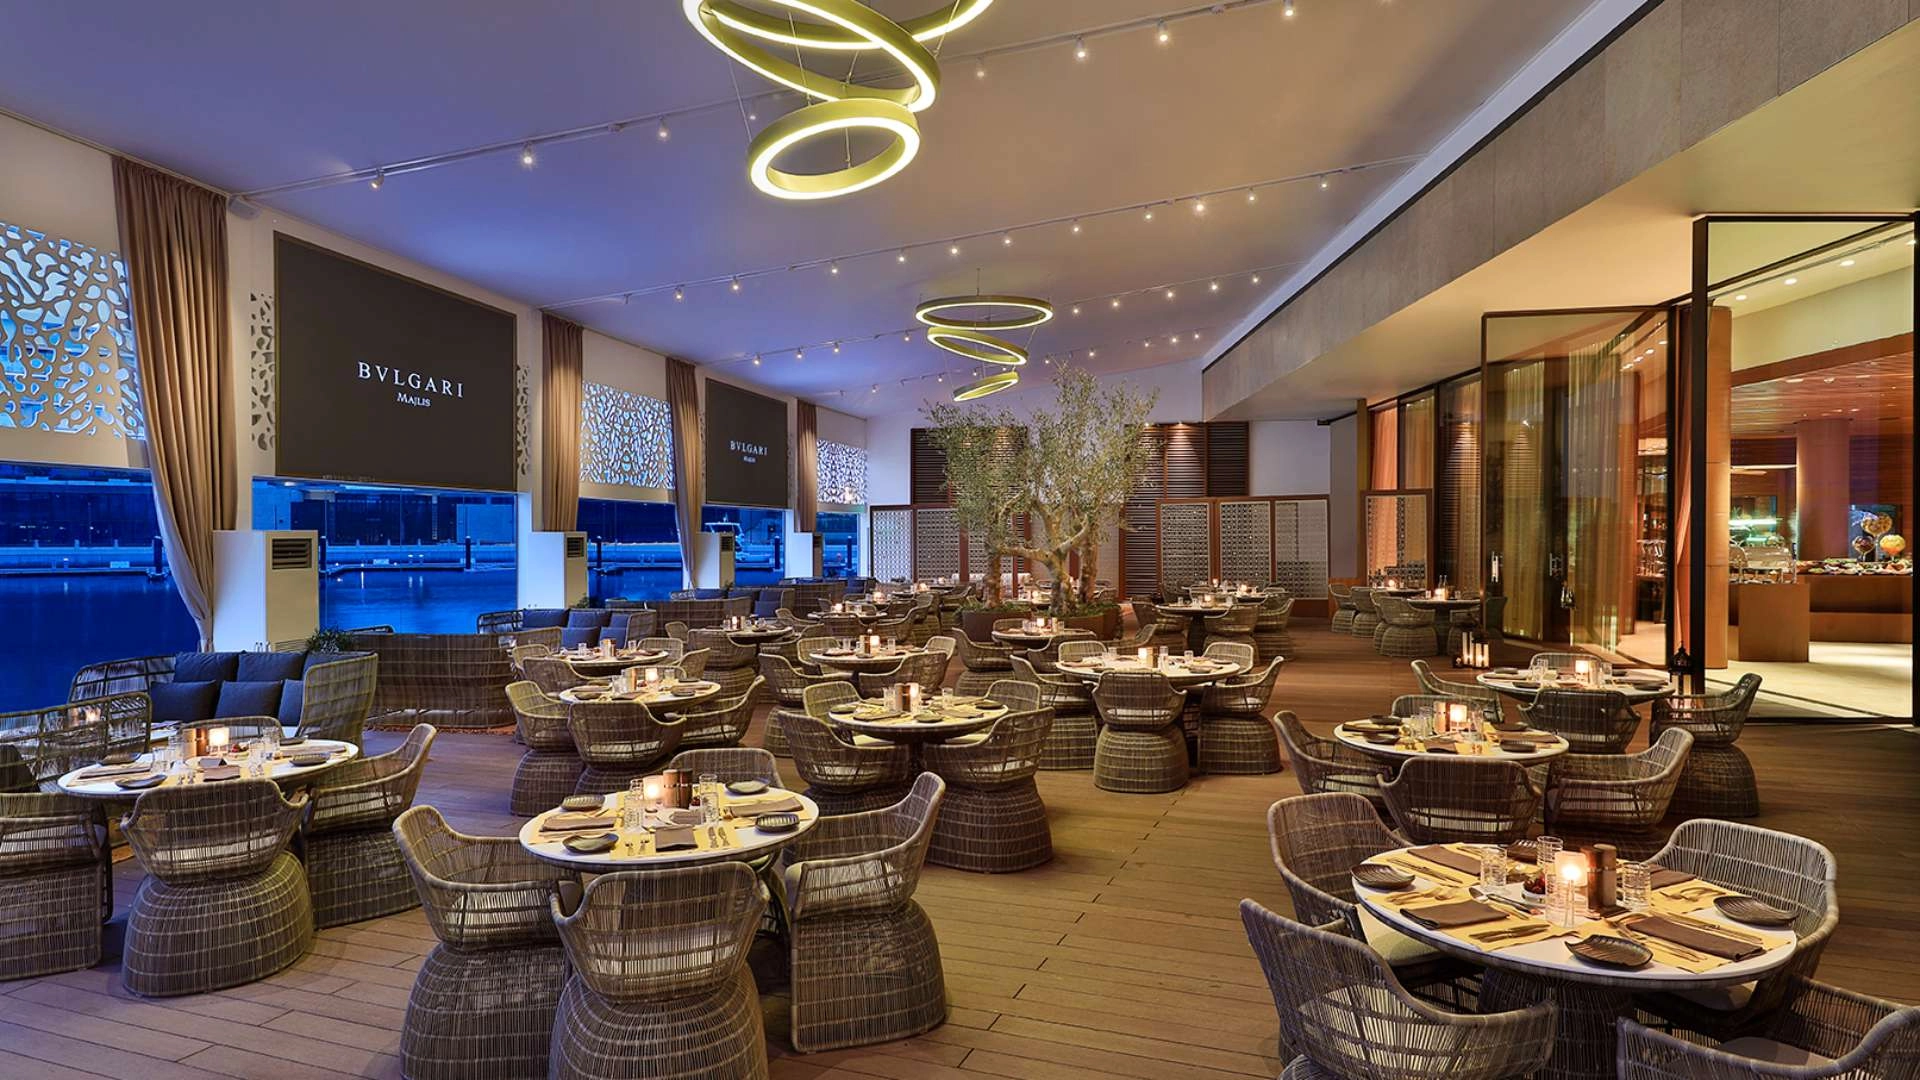 Yacht Club Restaurant Bvlgari Dubai